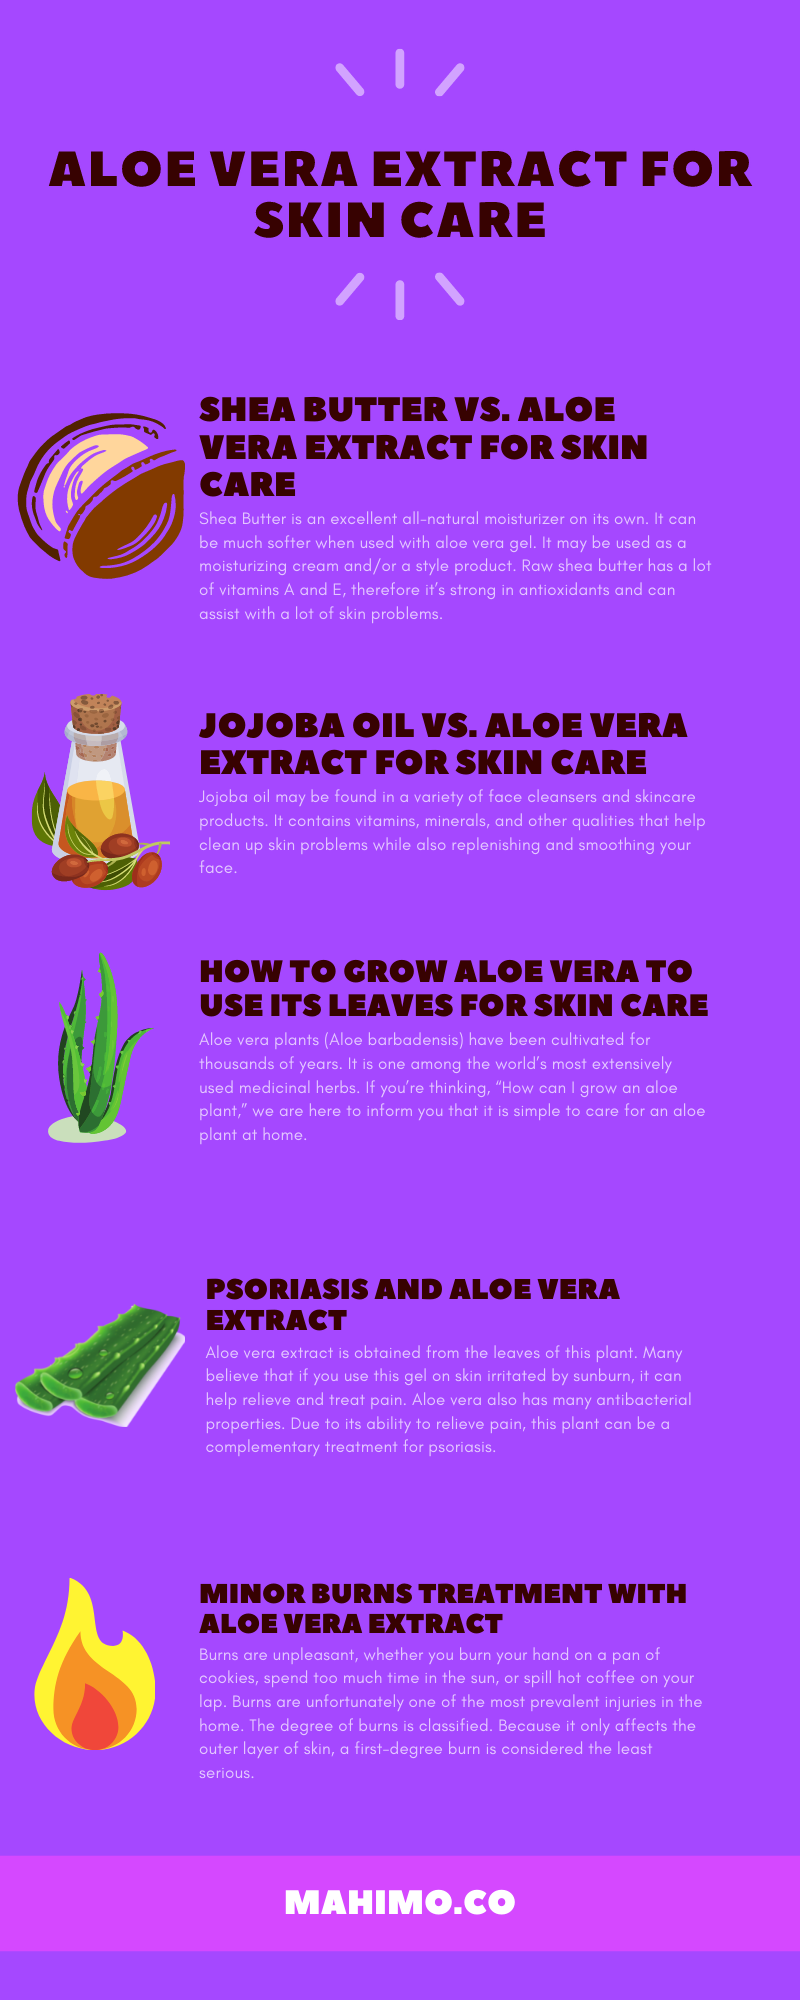 Aloe vera extract for skin care